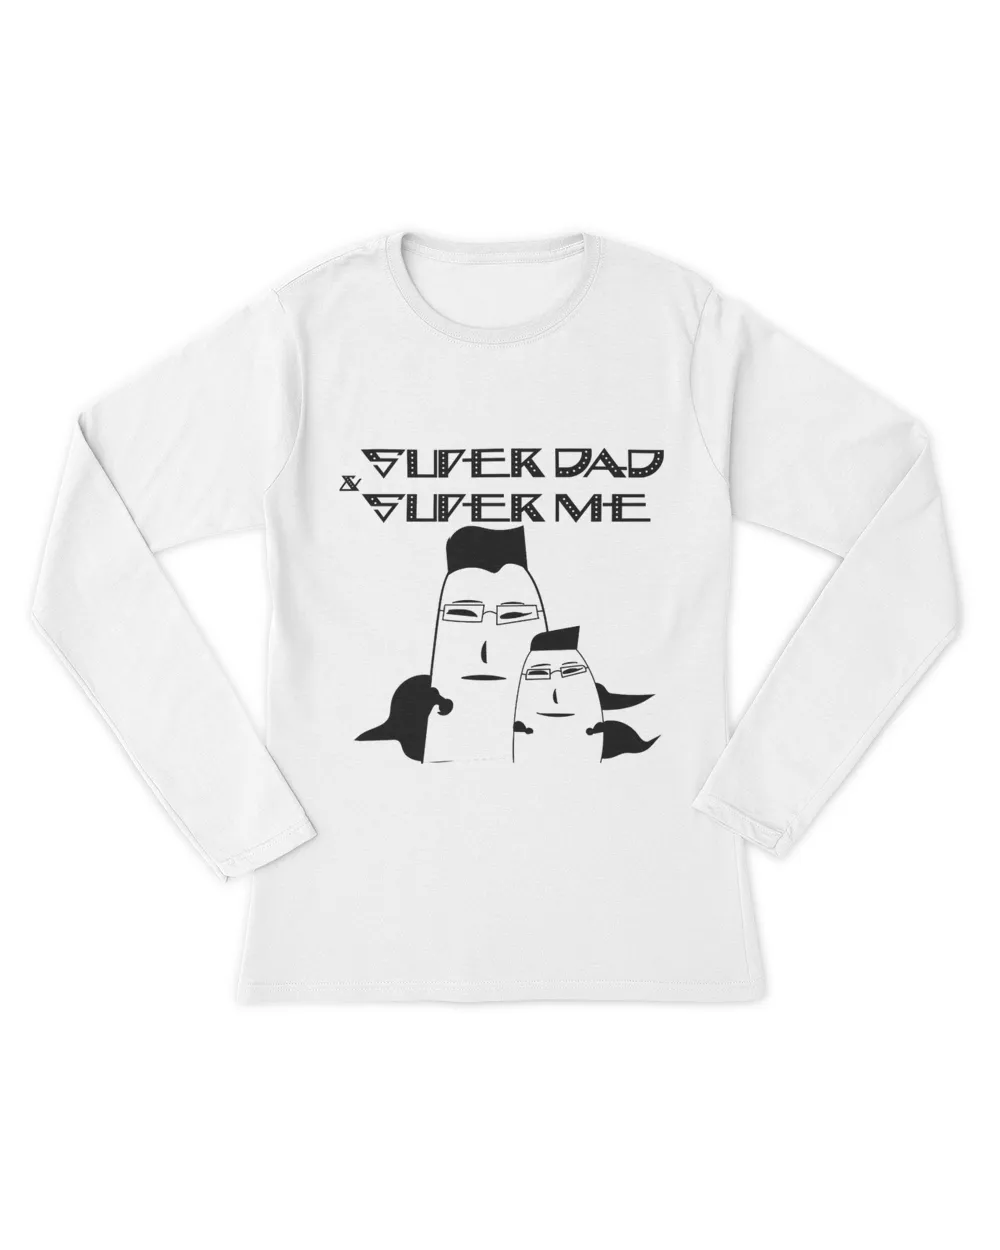 Father's Day T-Shirt, Super Dad T-Shirt, Kids T-Shirt